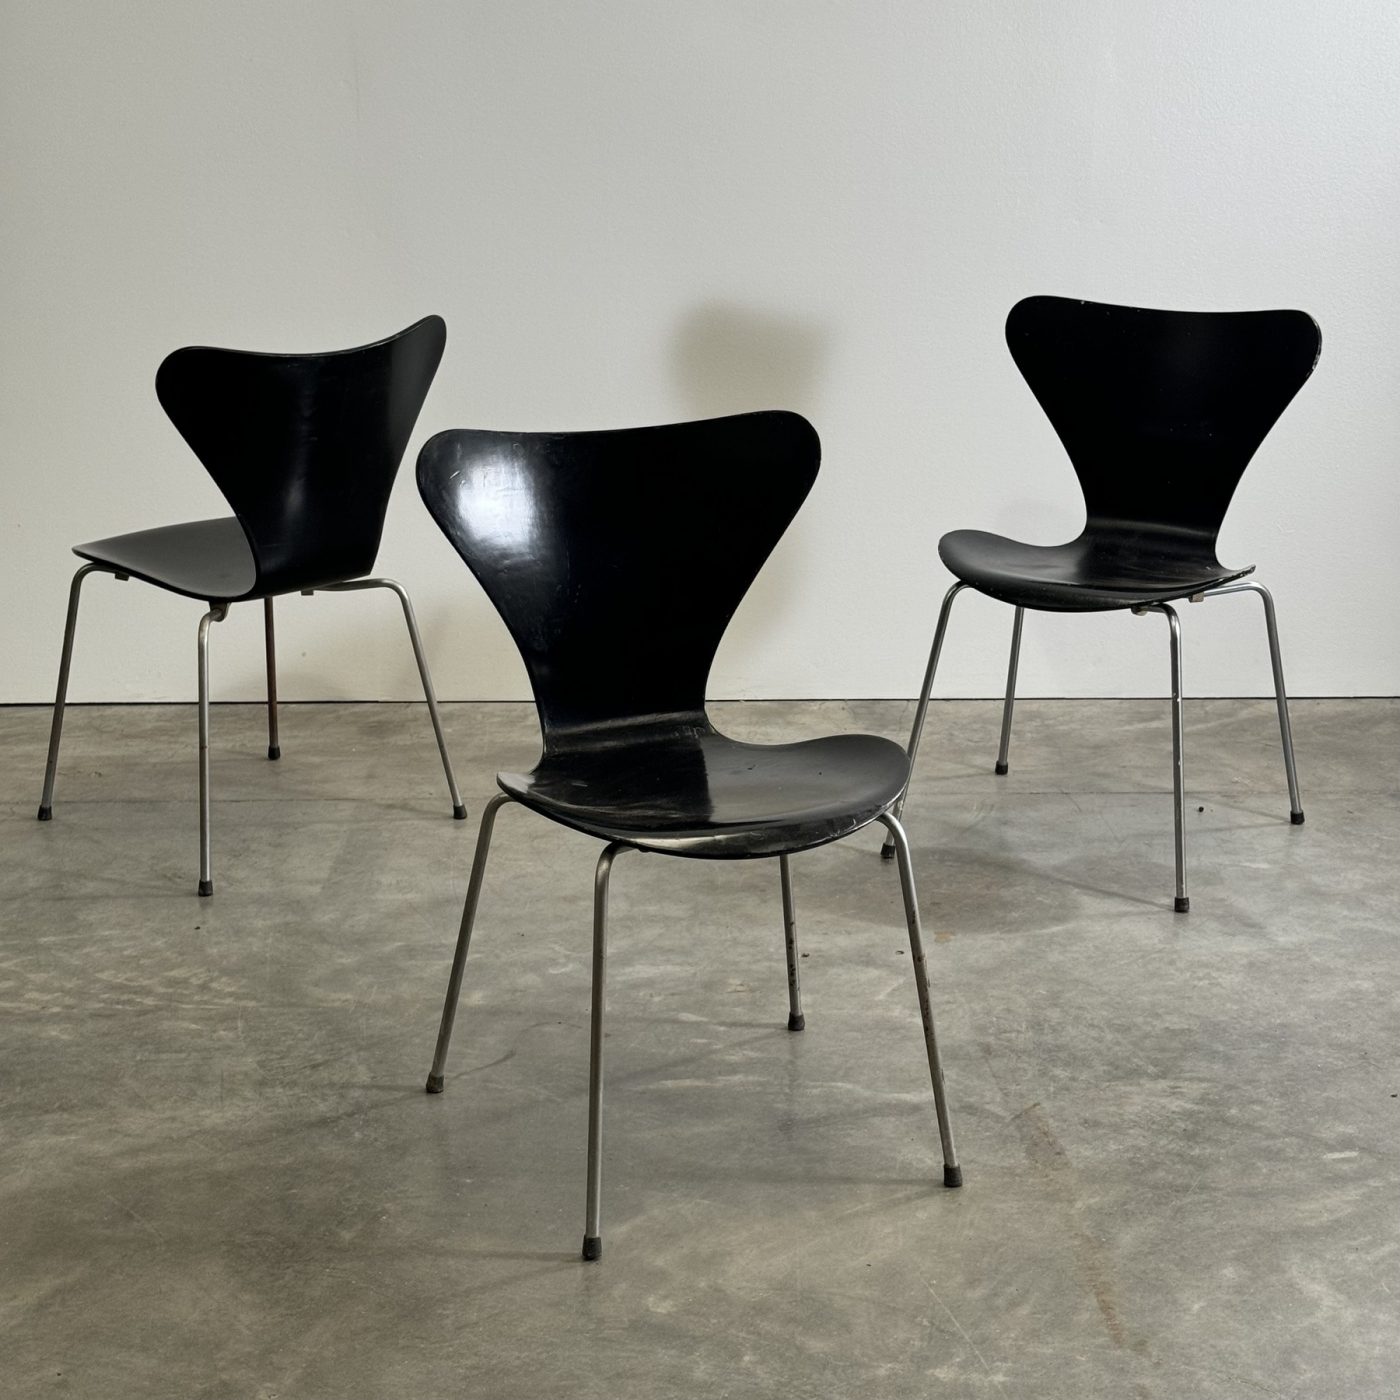 objet-vagabond-jacobsen-chairs0006